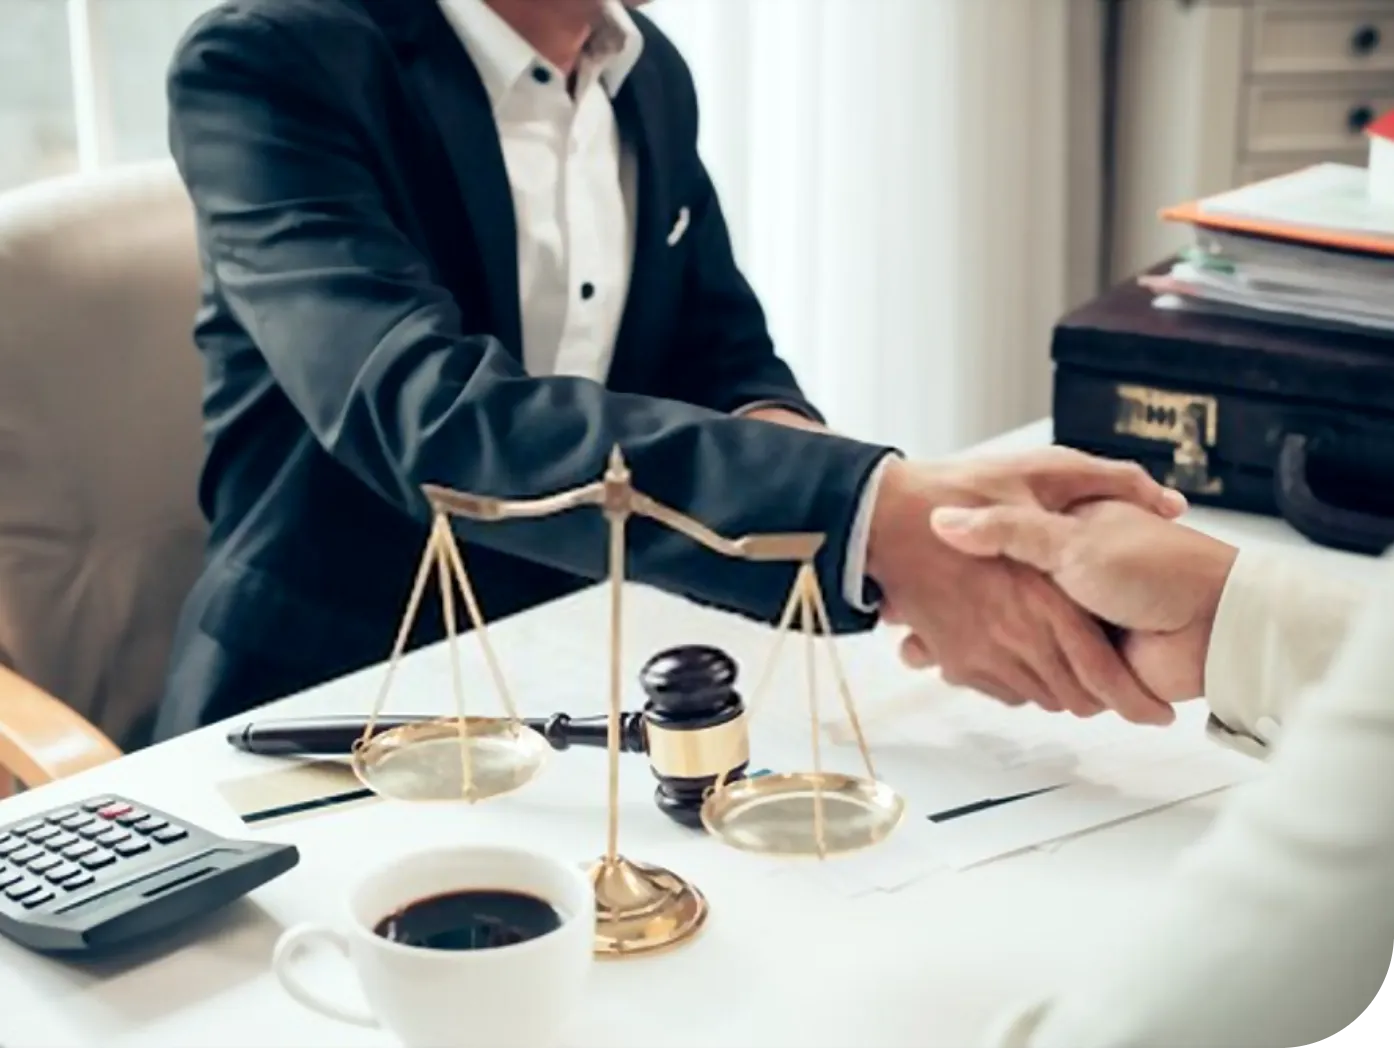 Finding the Right Legal Consultancy Firm in the UAE 4t1SaI4HIuLzOgY8TuQ6SNqUWKHWze-ujyBqHs7G36fyXT27ZxHa07D8Fn831BFvOFM6t0M1dkZtzAqgBZzmWo6ultnGE4LbIMOOajdKnPDDh4Een0vwEZpzARqPQxJqxkyJMjjWScEUWehtsbZMzLM